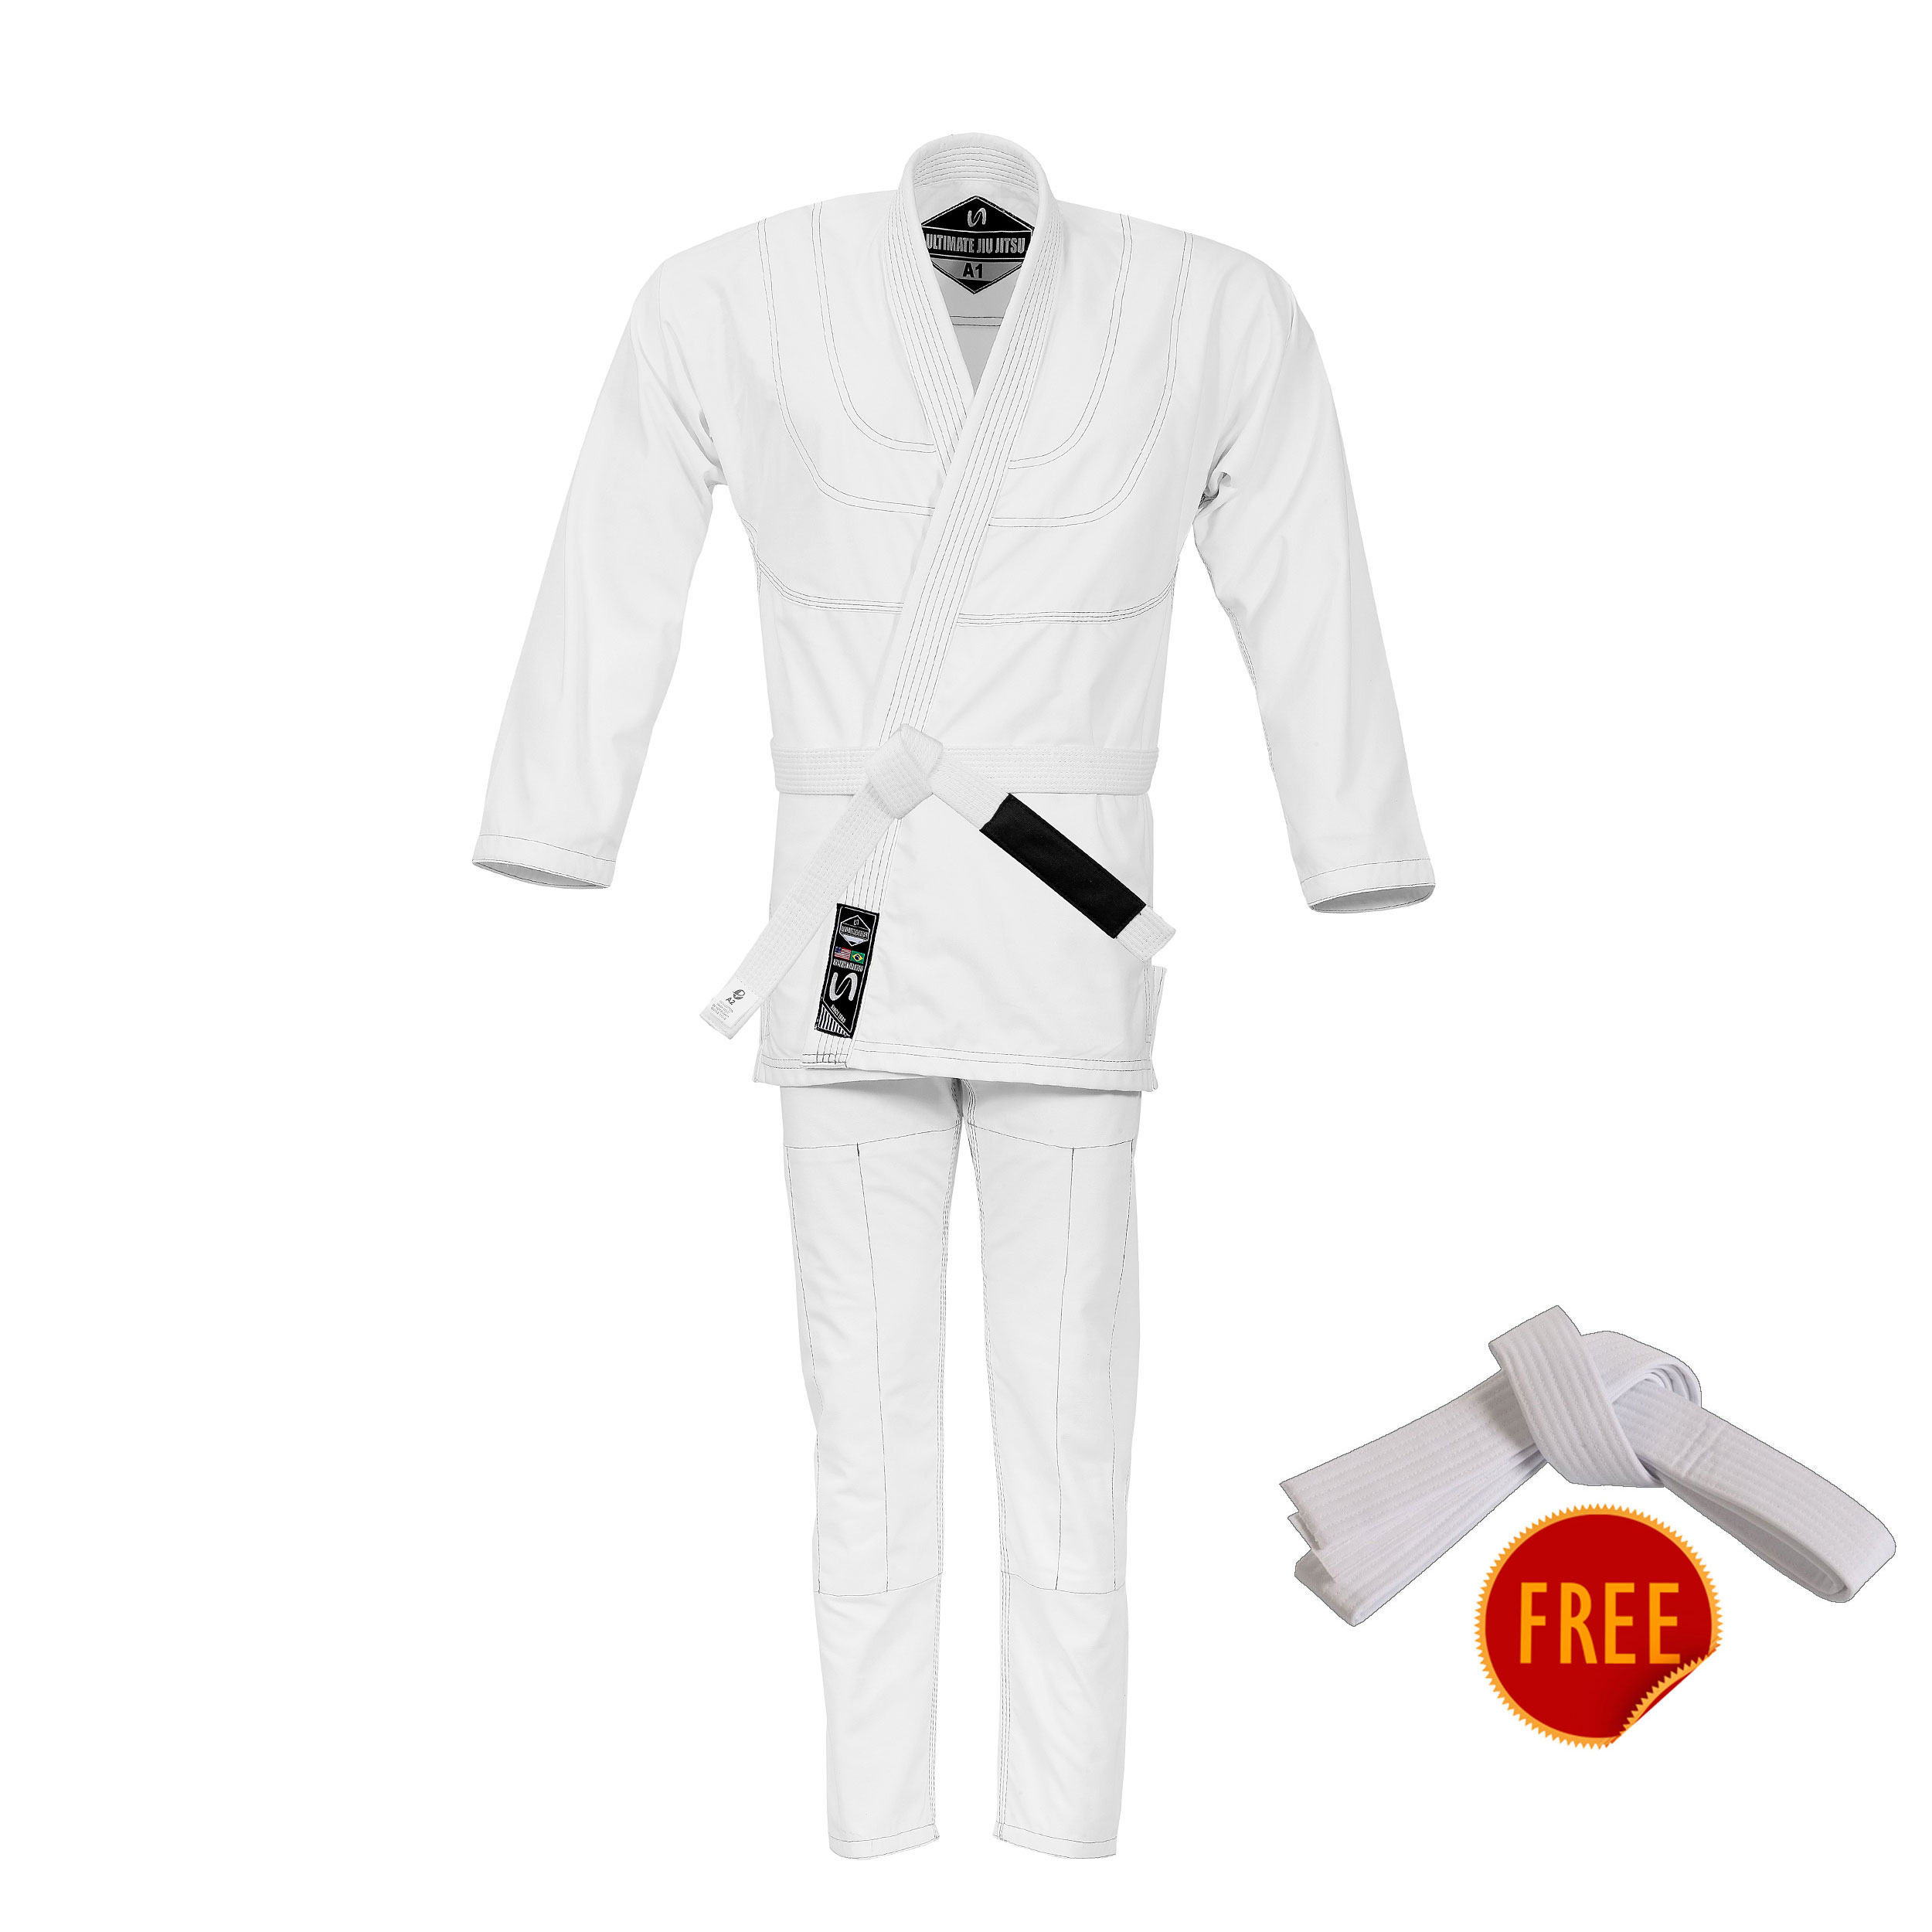 Brazilian Jiujitsu Very Light Weight 100% Cotton 10oz Canvas Ultra Lite BJJ Kimono Gi Uniform 